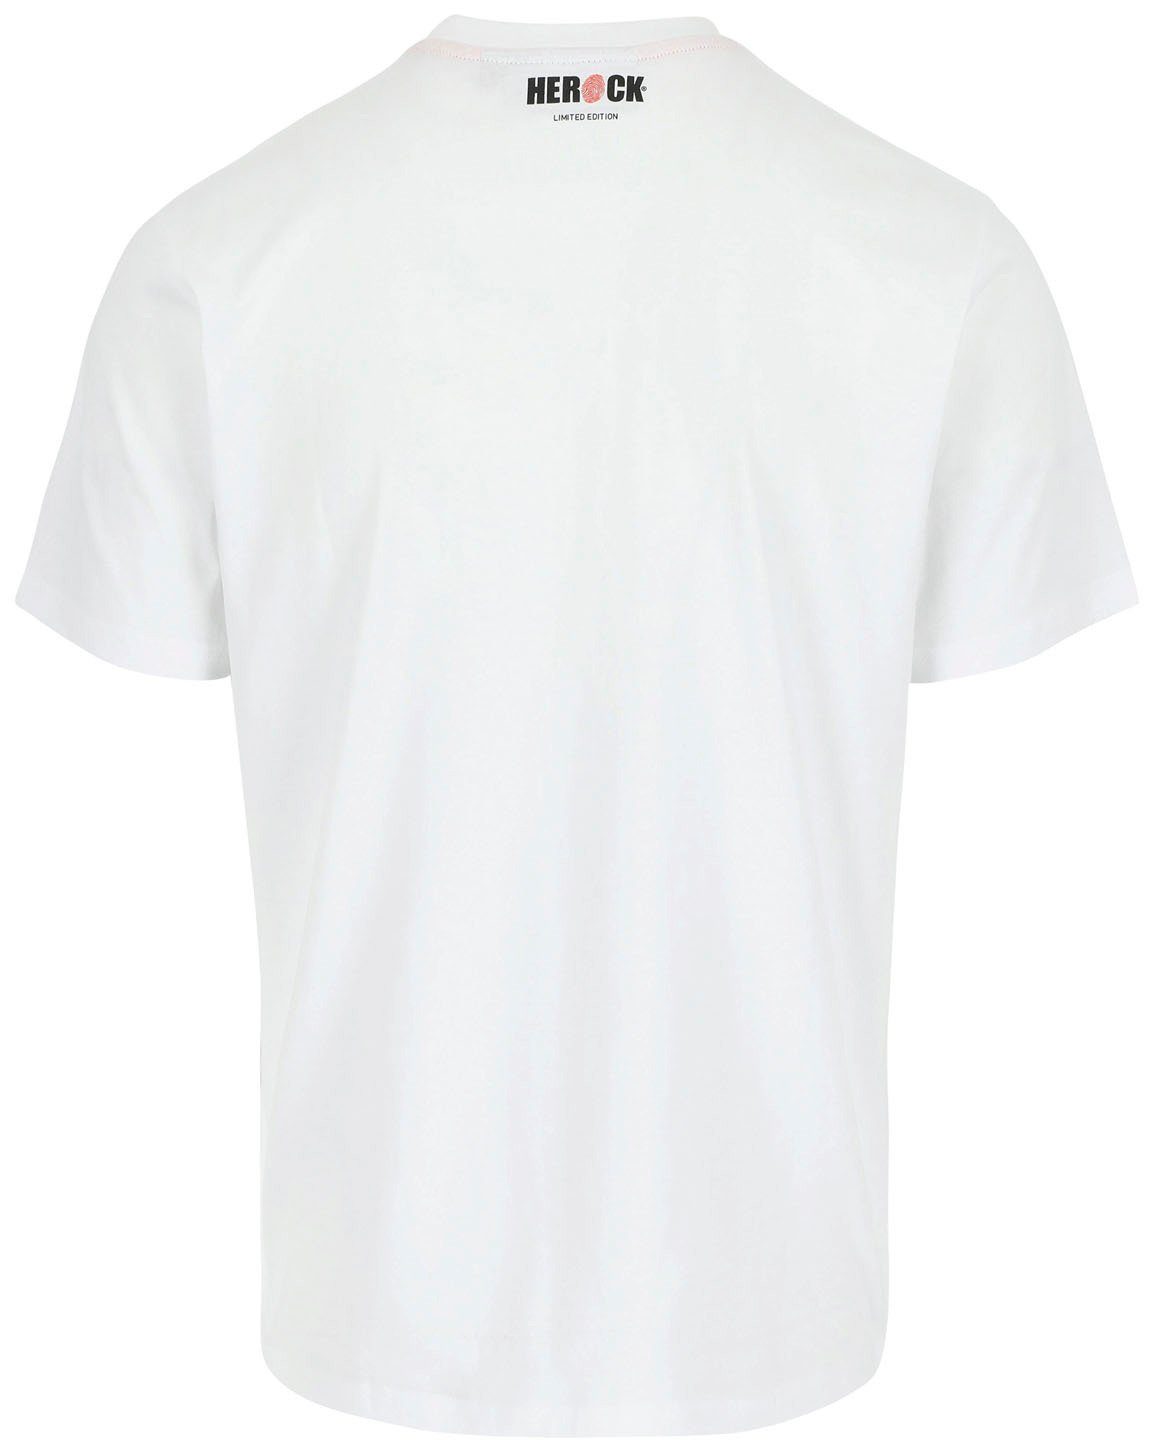 Edition Skullo T-Shirt Limited Herock